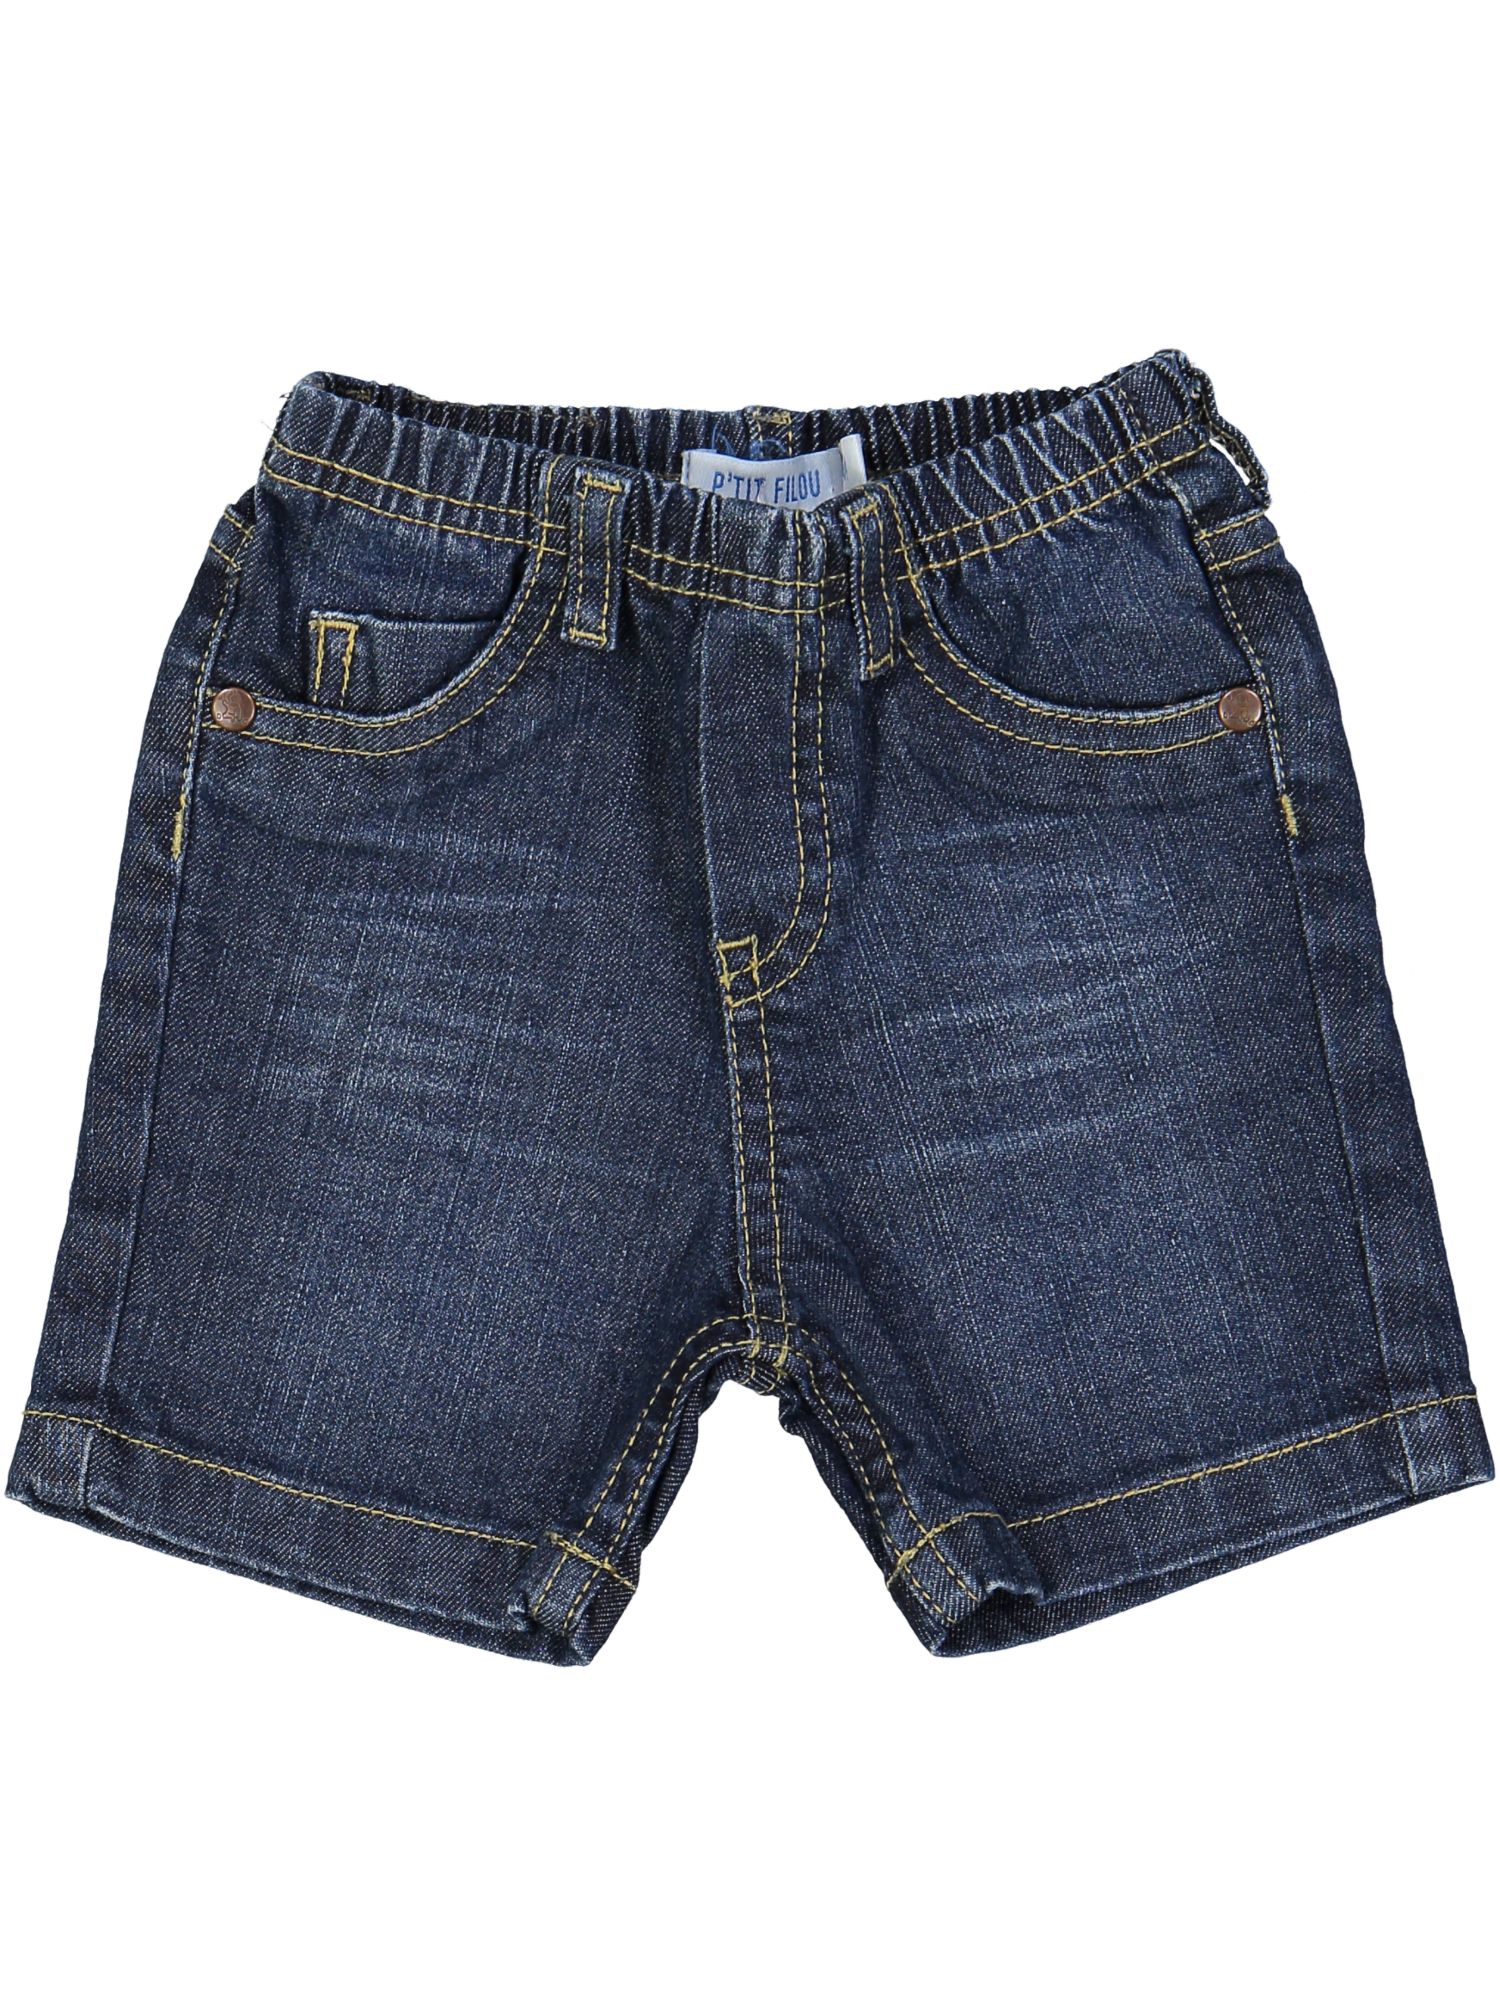 short blauw jeans 09m